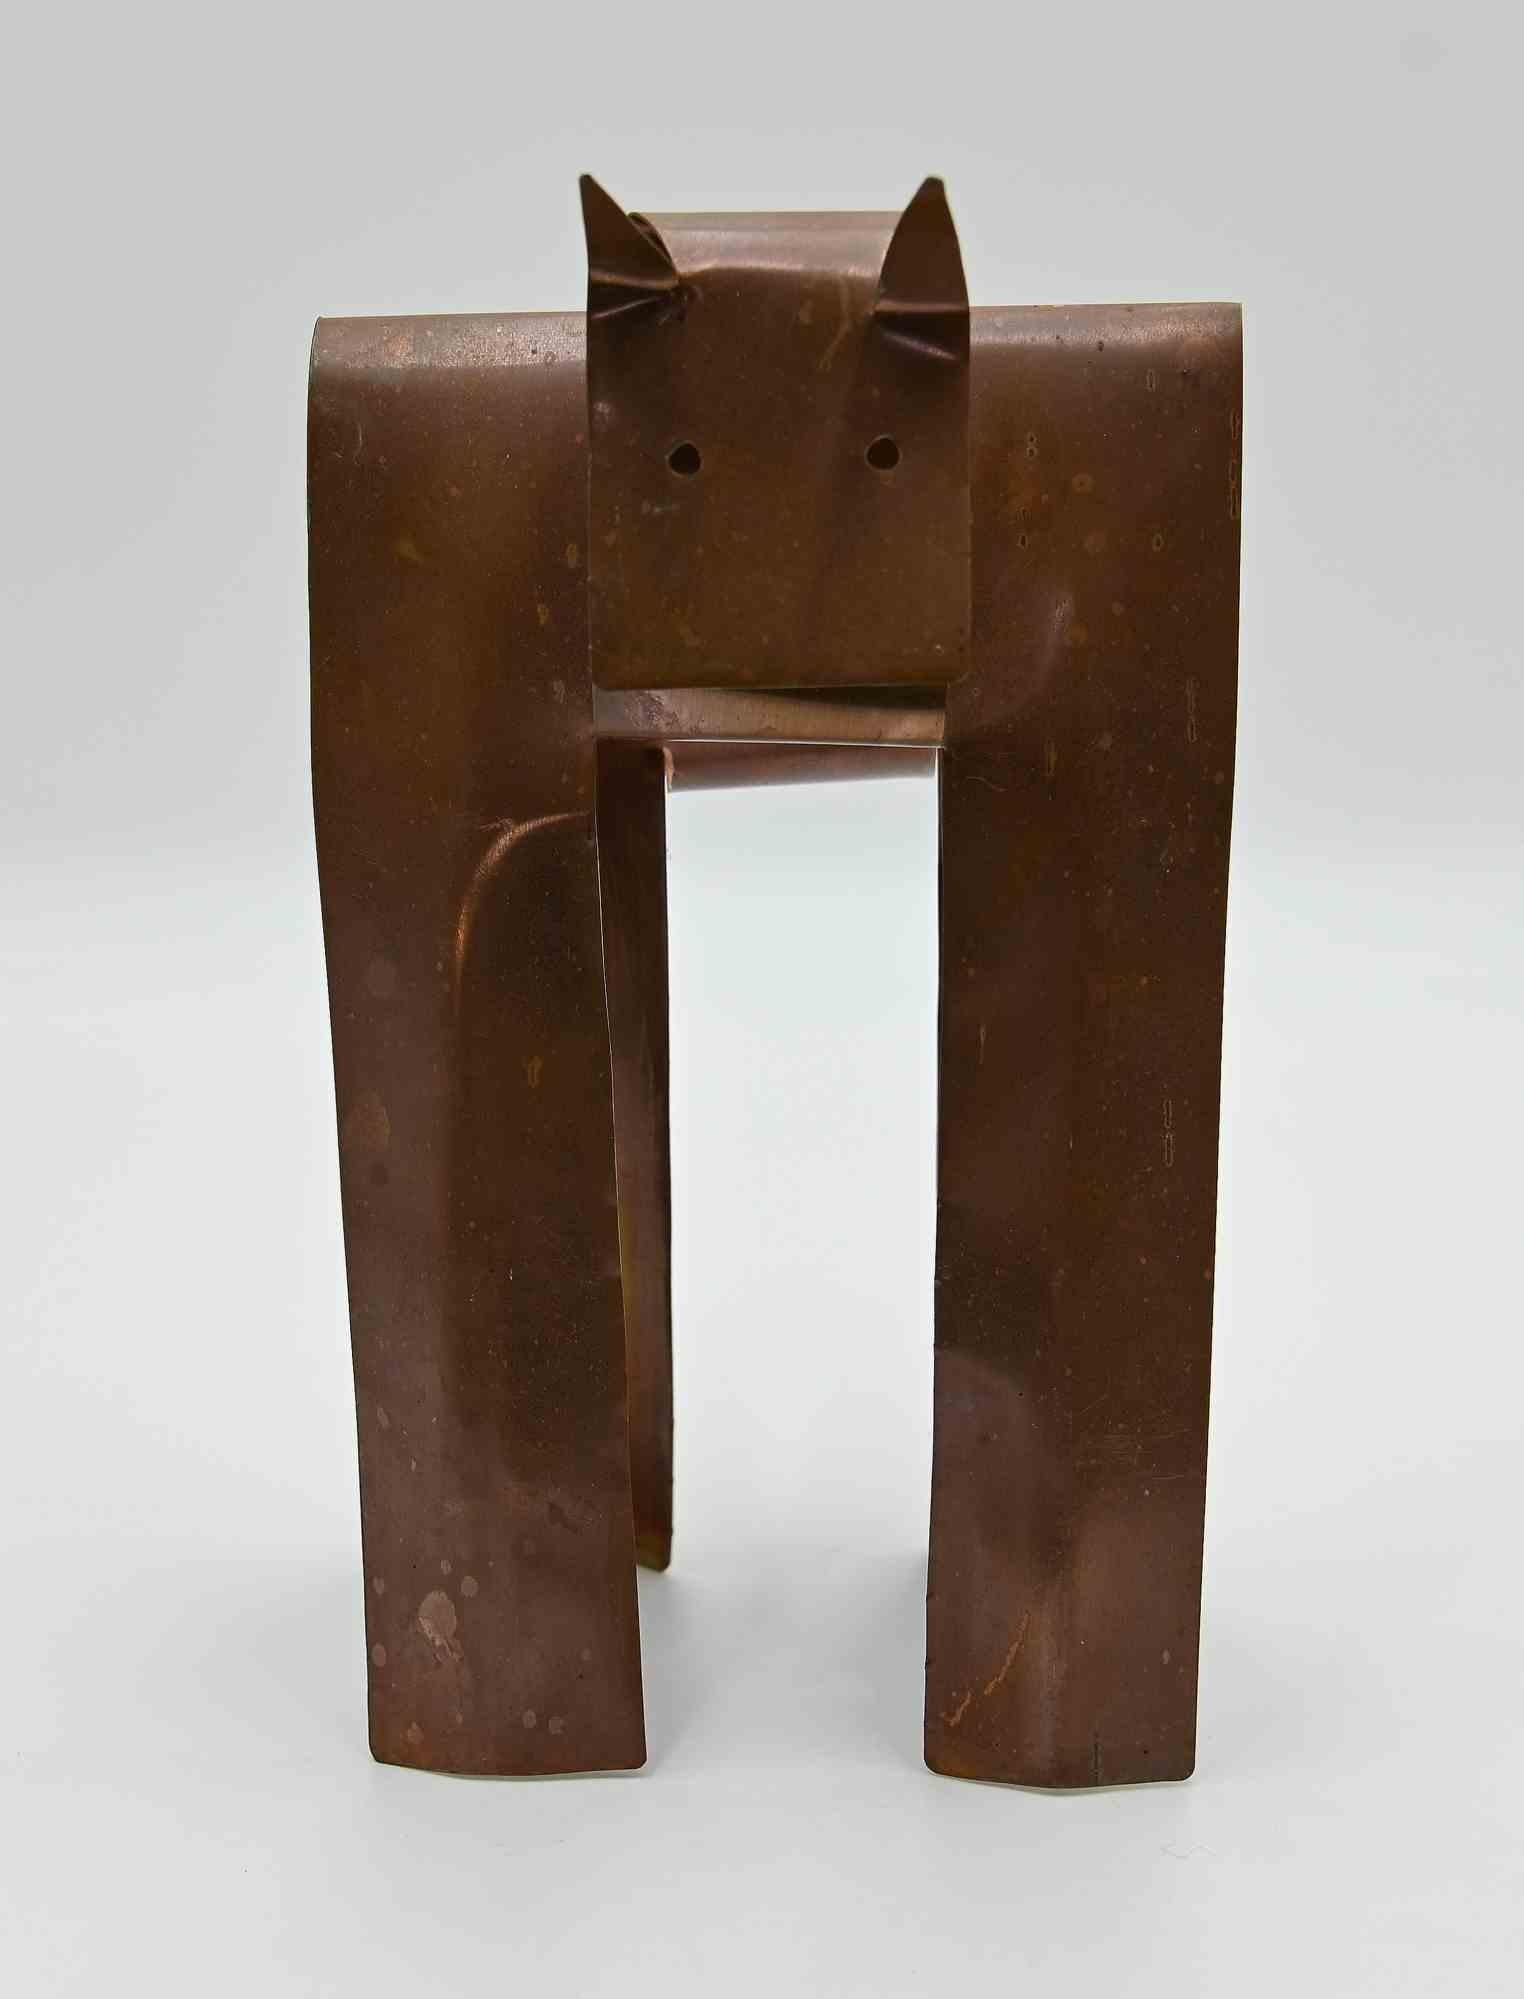 The Cat - Bronze Sculpture by Tommaso Cascella - 2004 For Sale 3